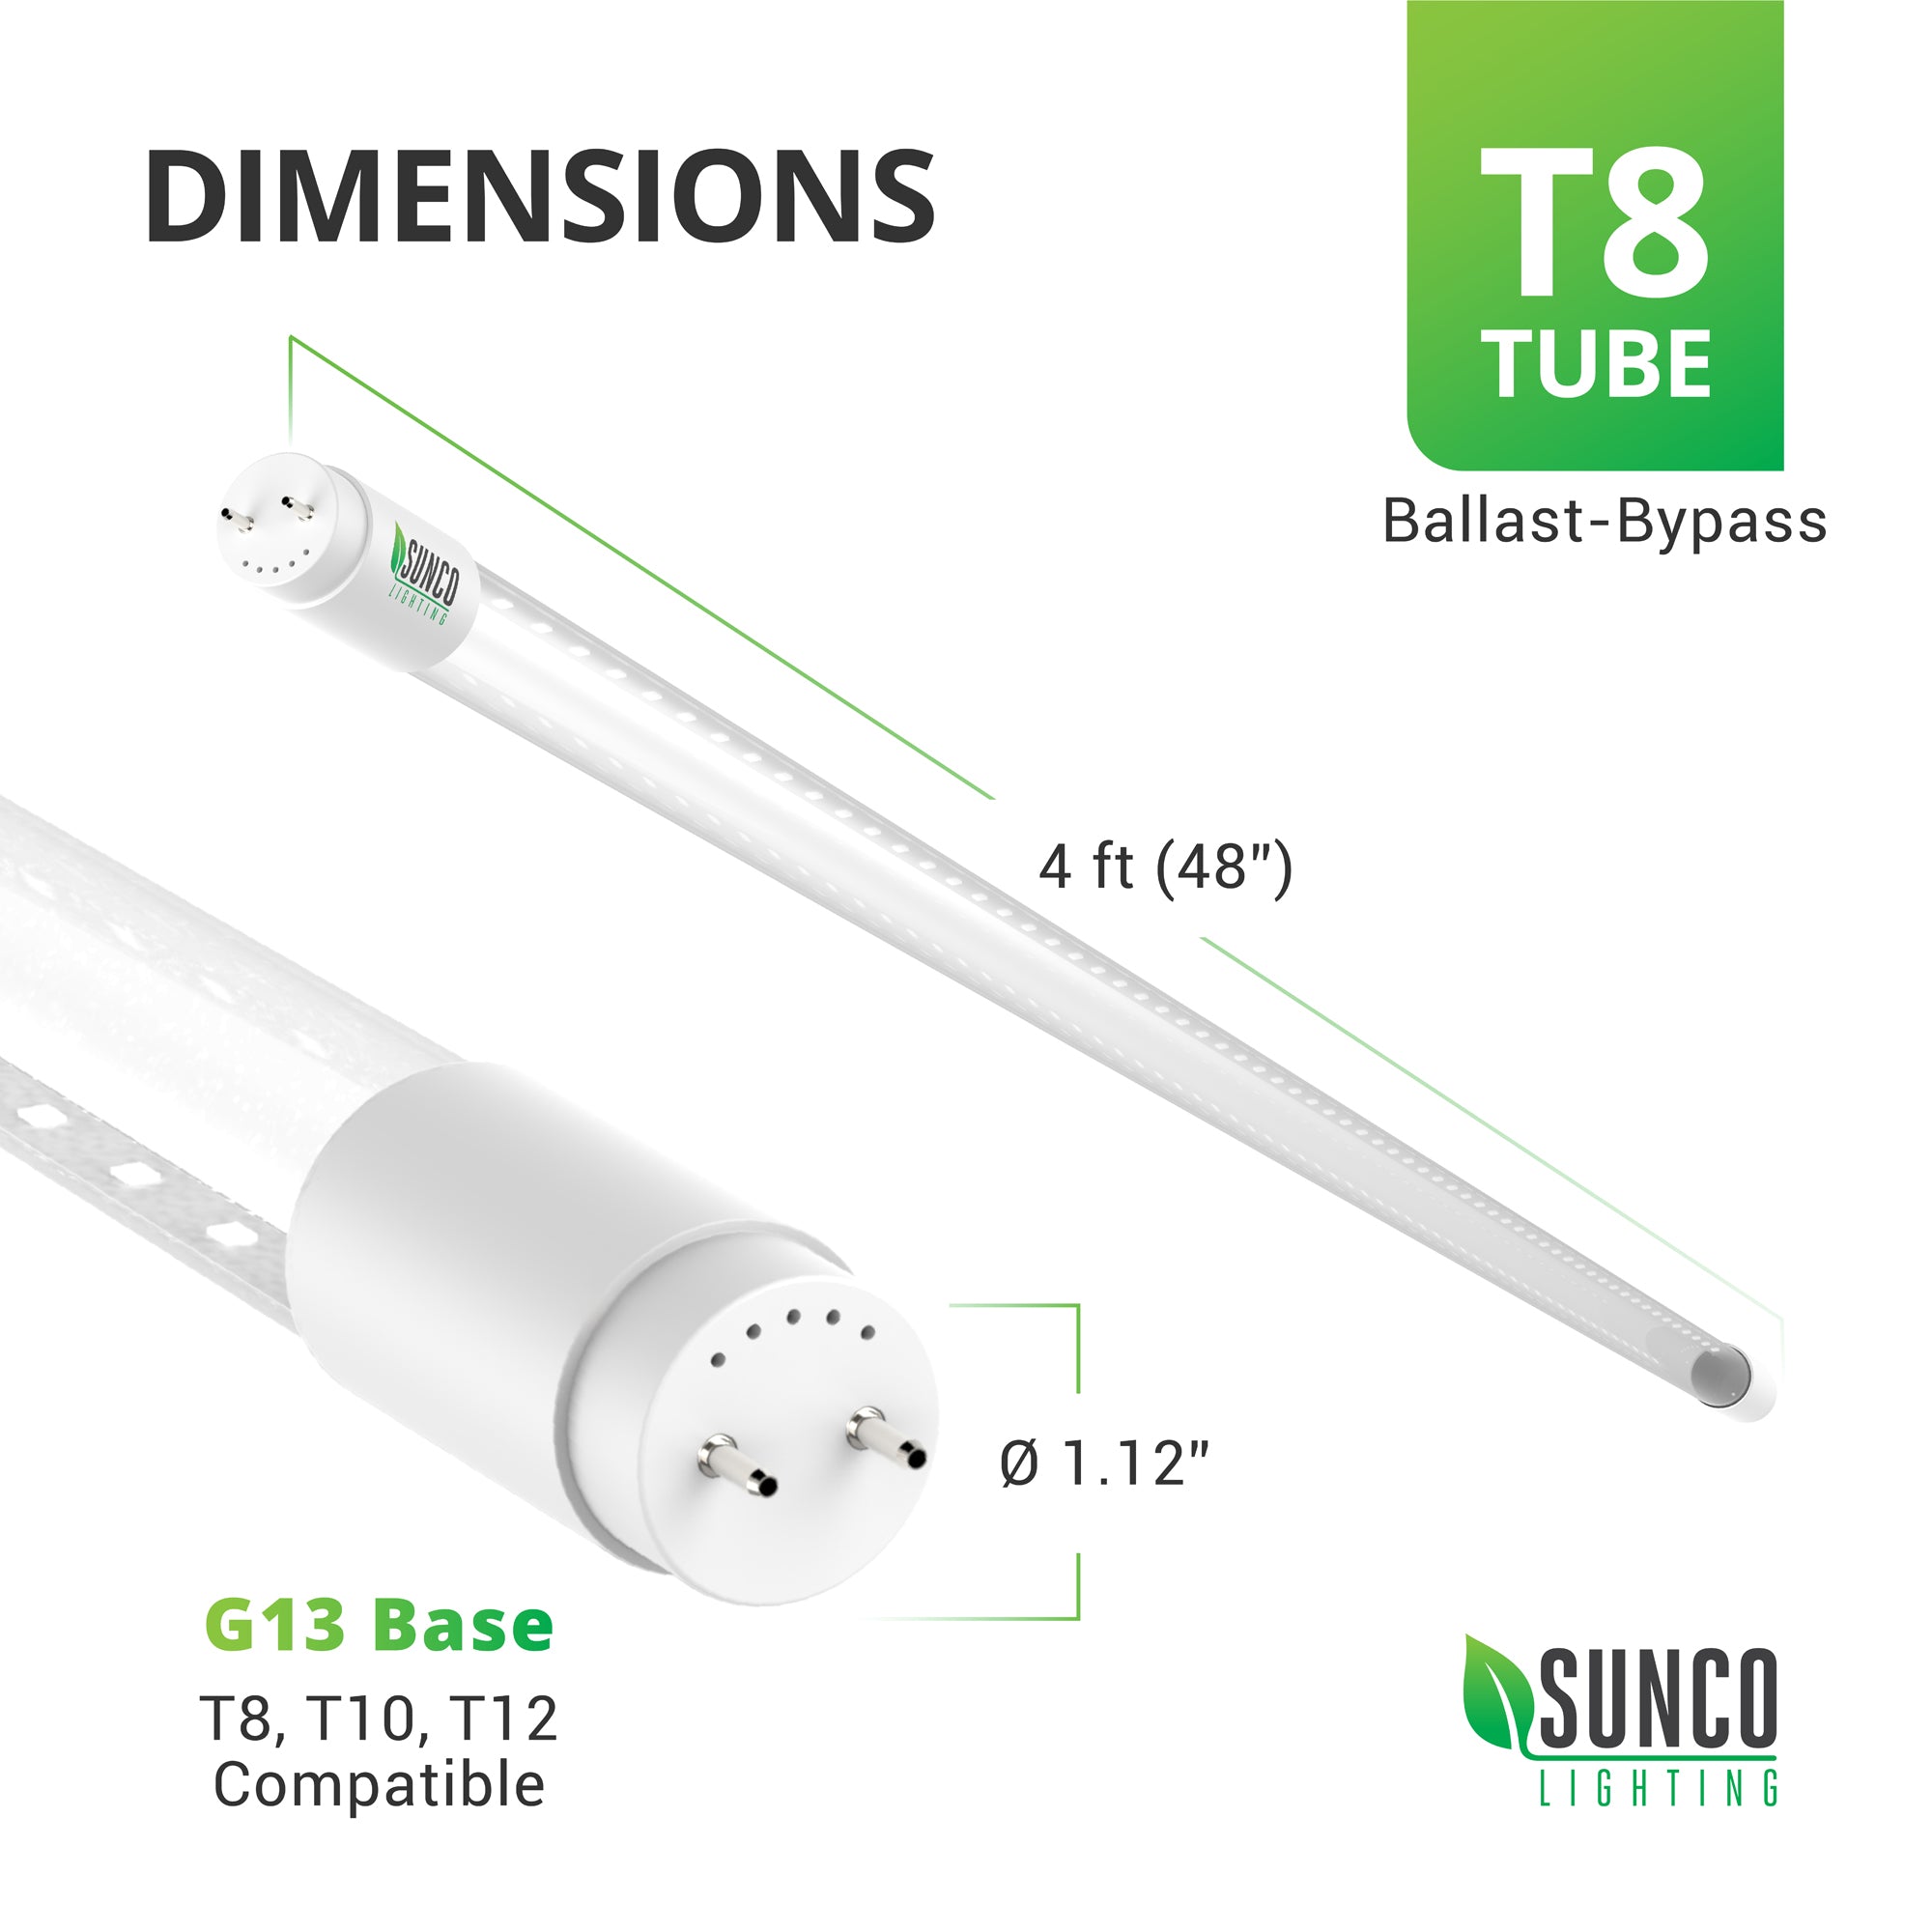 4ft T8 Tube, Plug & Play or Ballast Bypass, Commercial Lighting